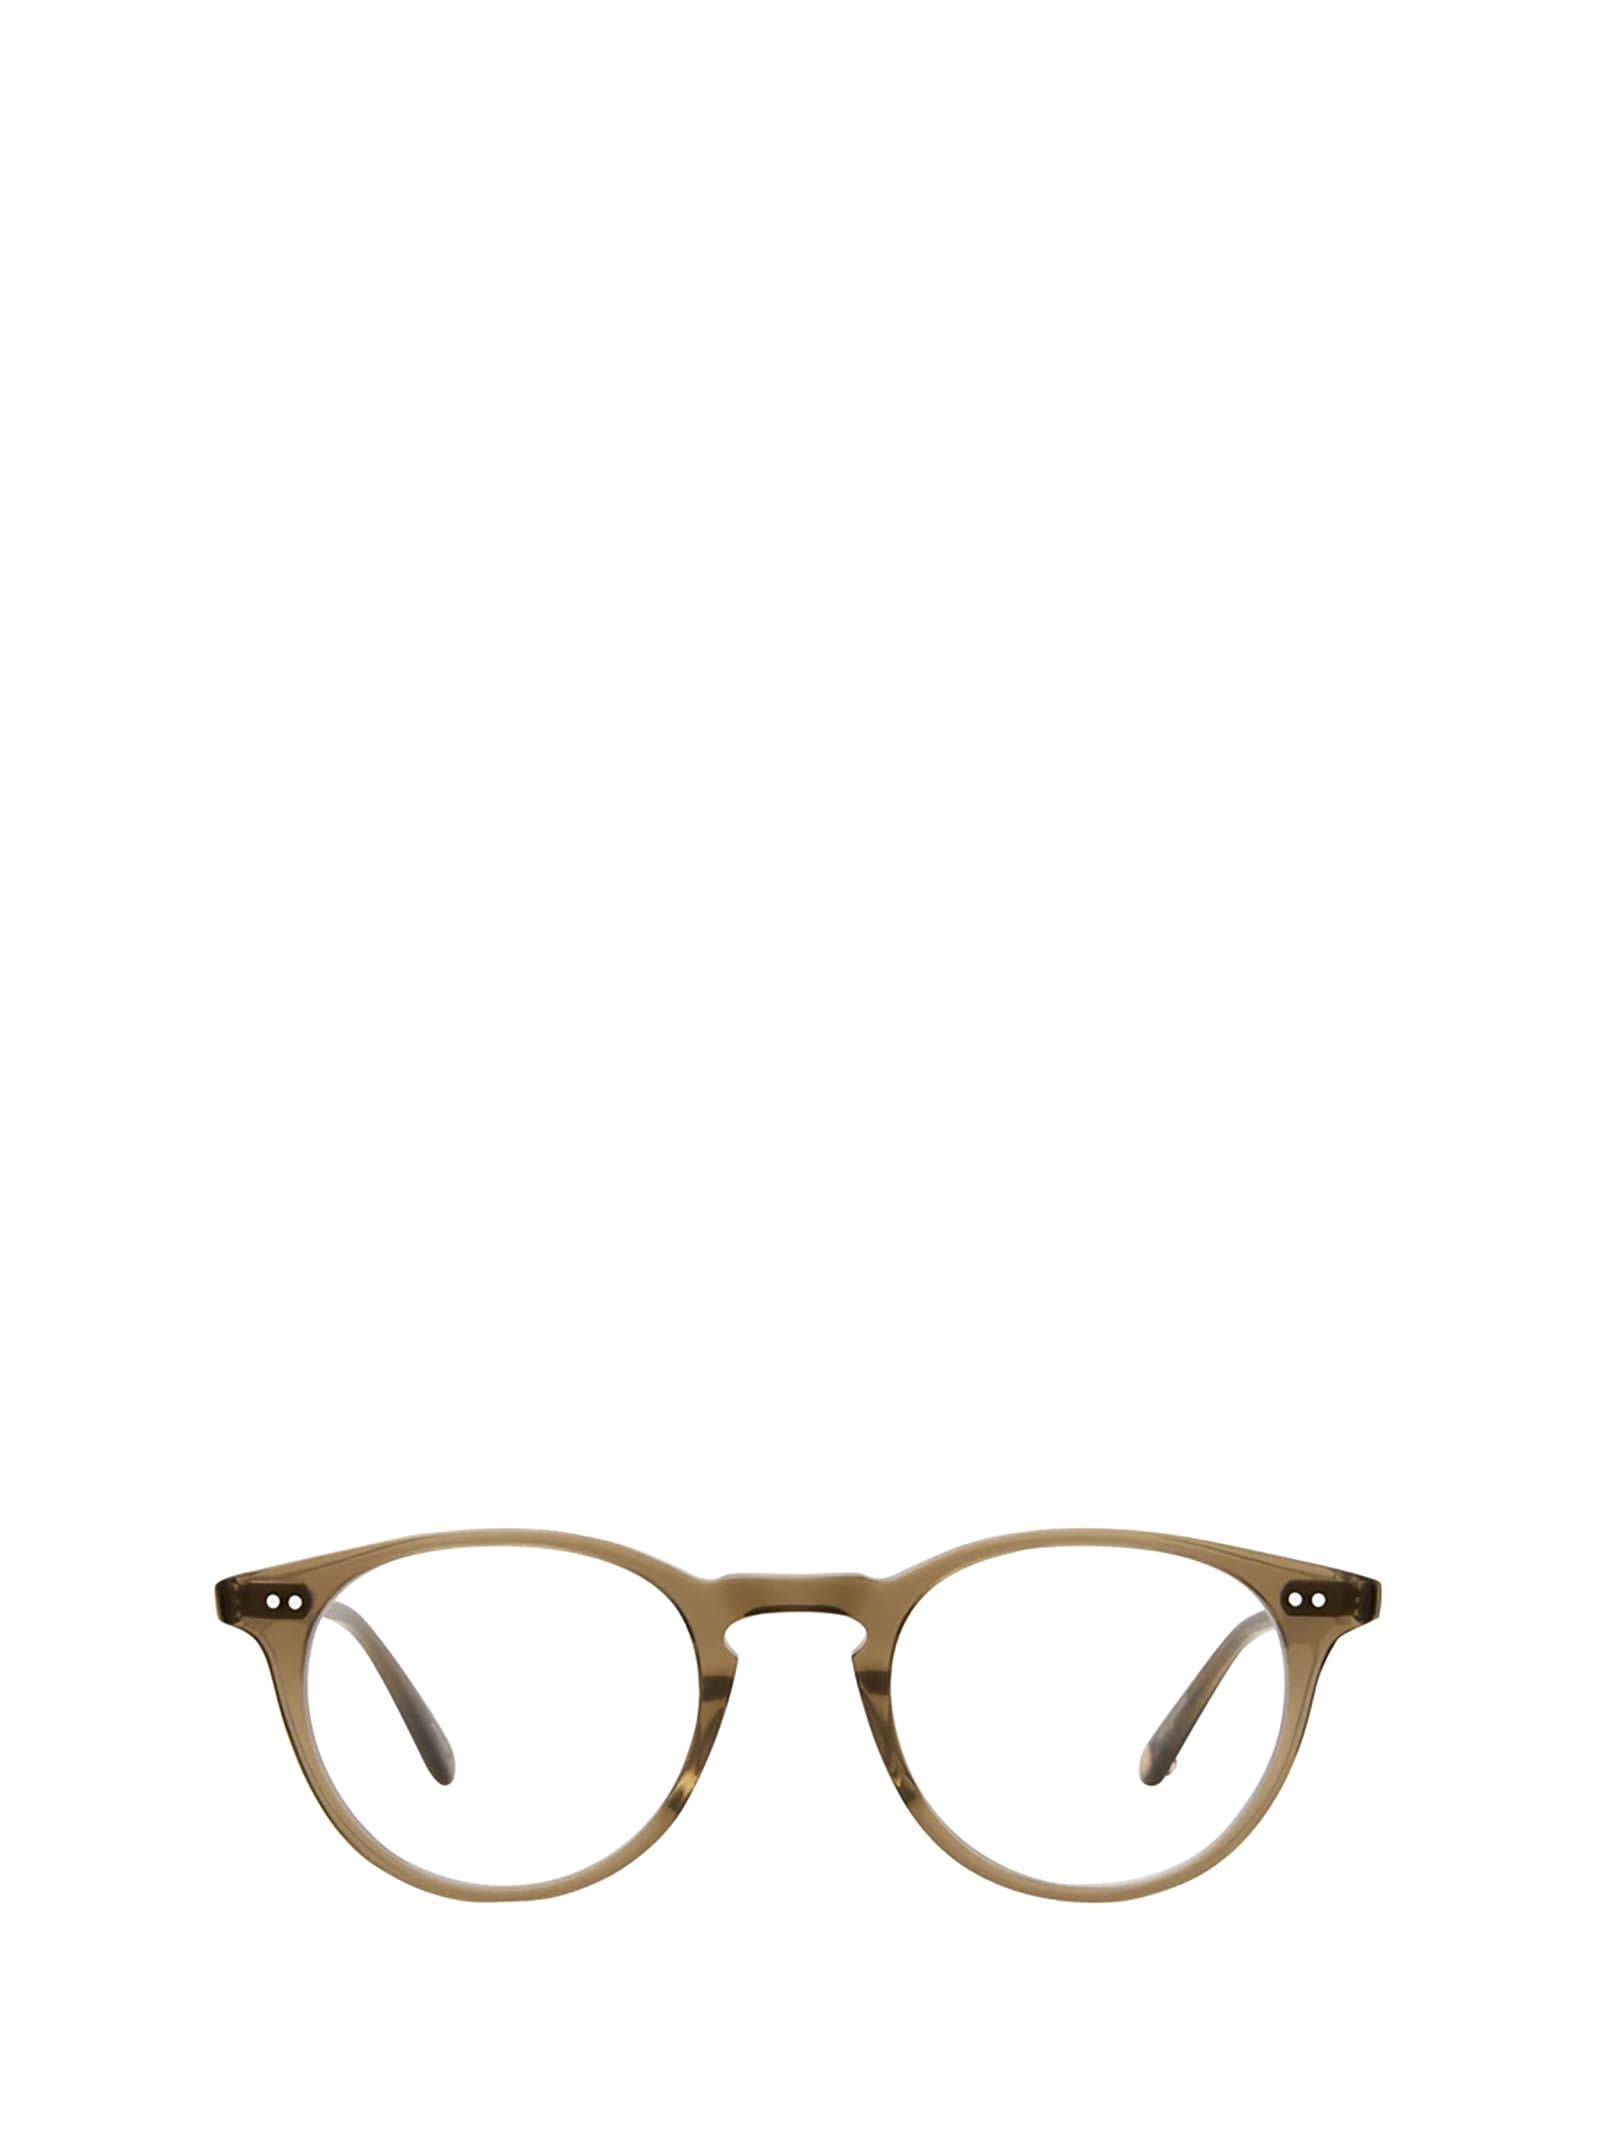 Winward Olio Glasses